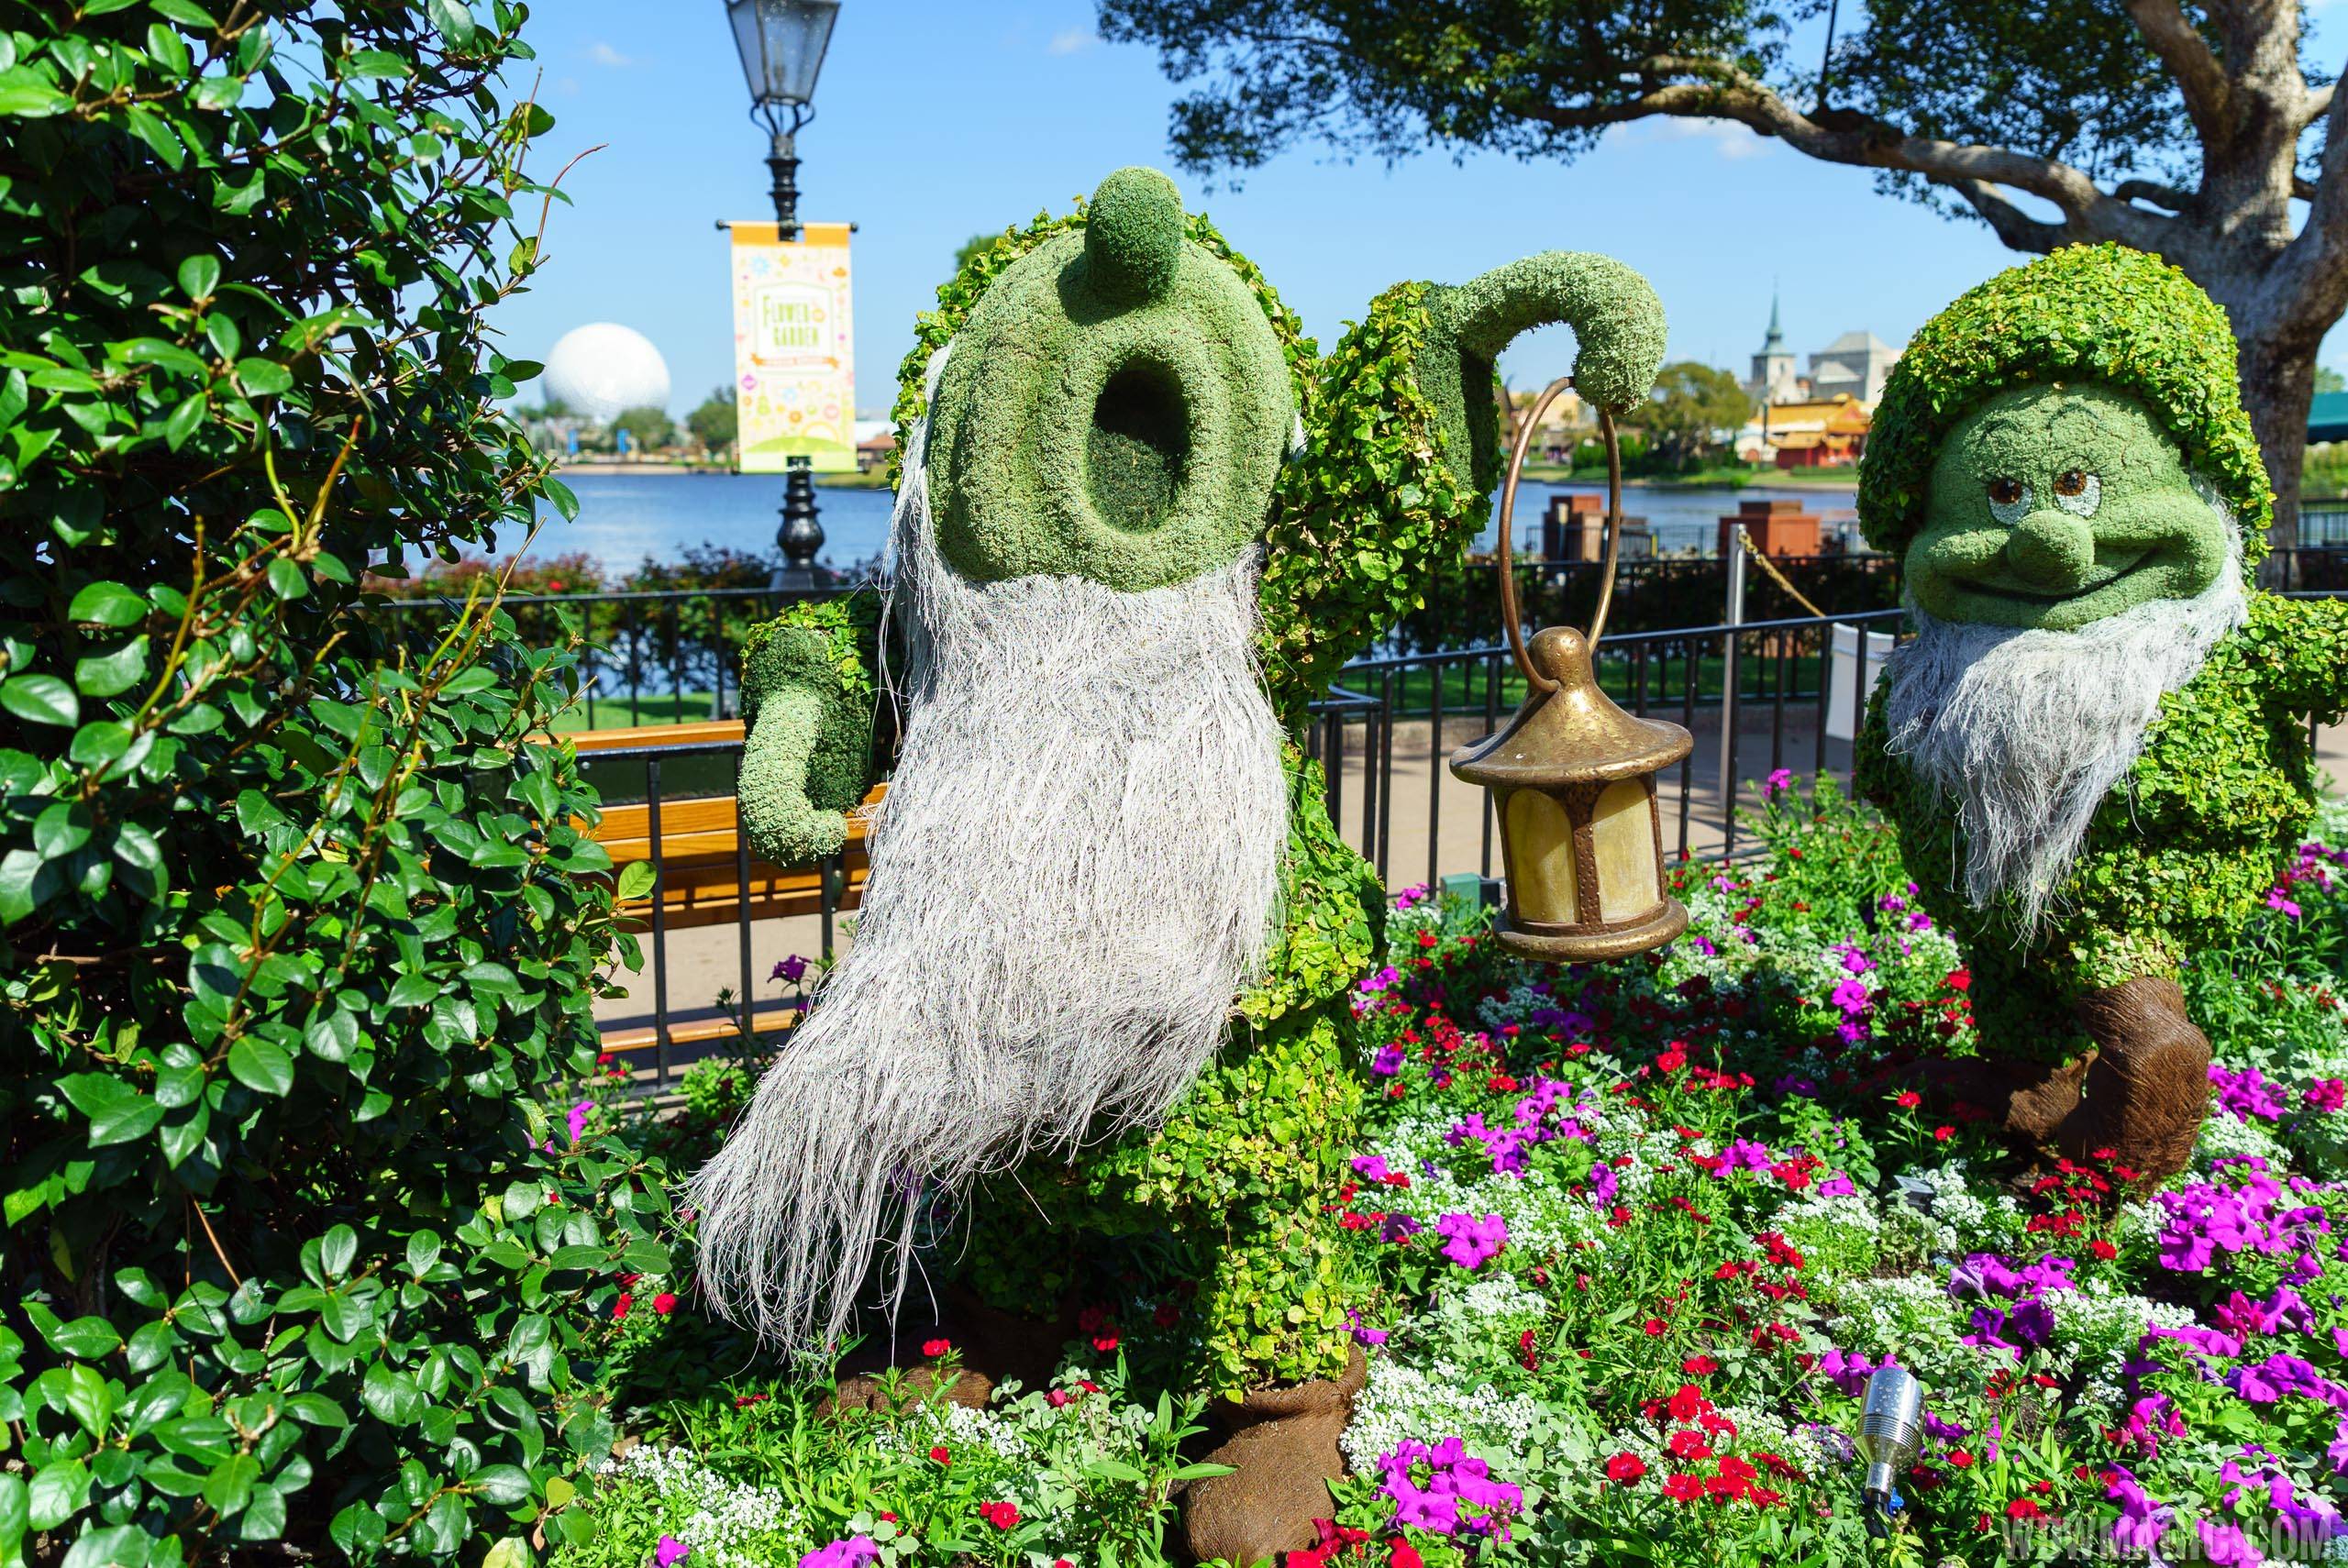 2016 Epcot International Flower and Garden Festival - Sleepy topiary